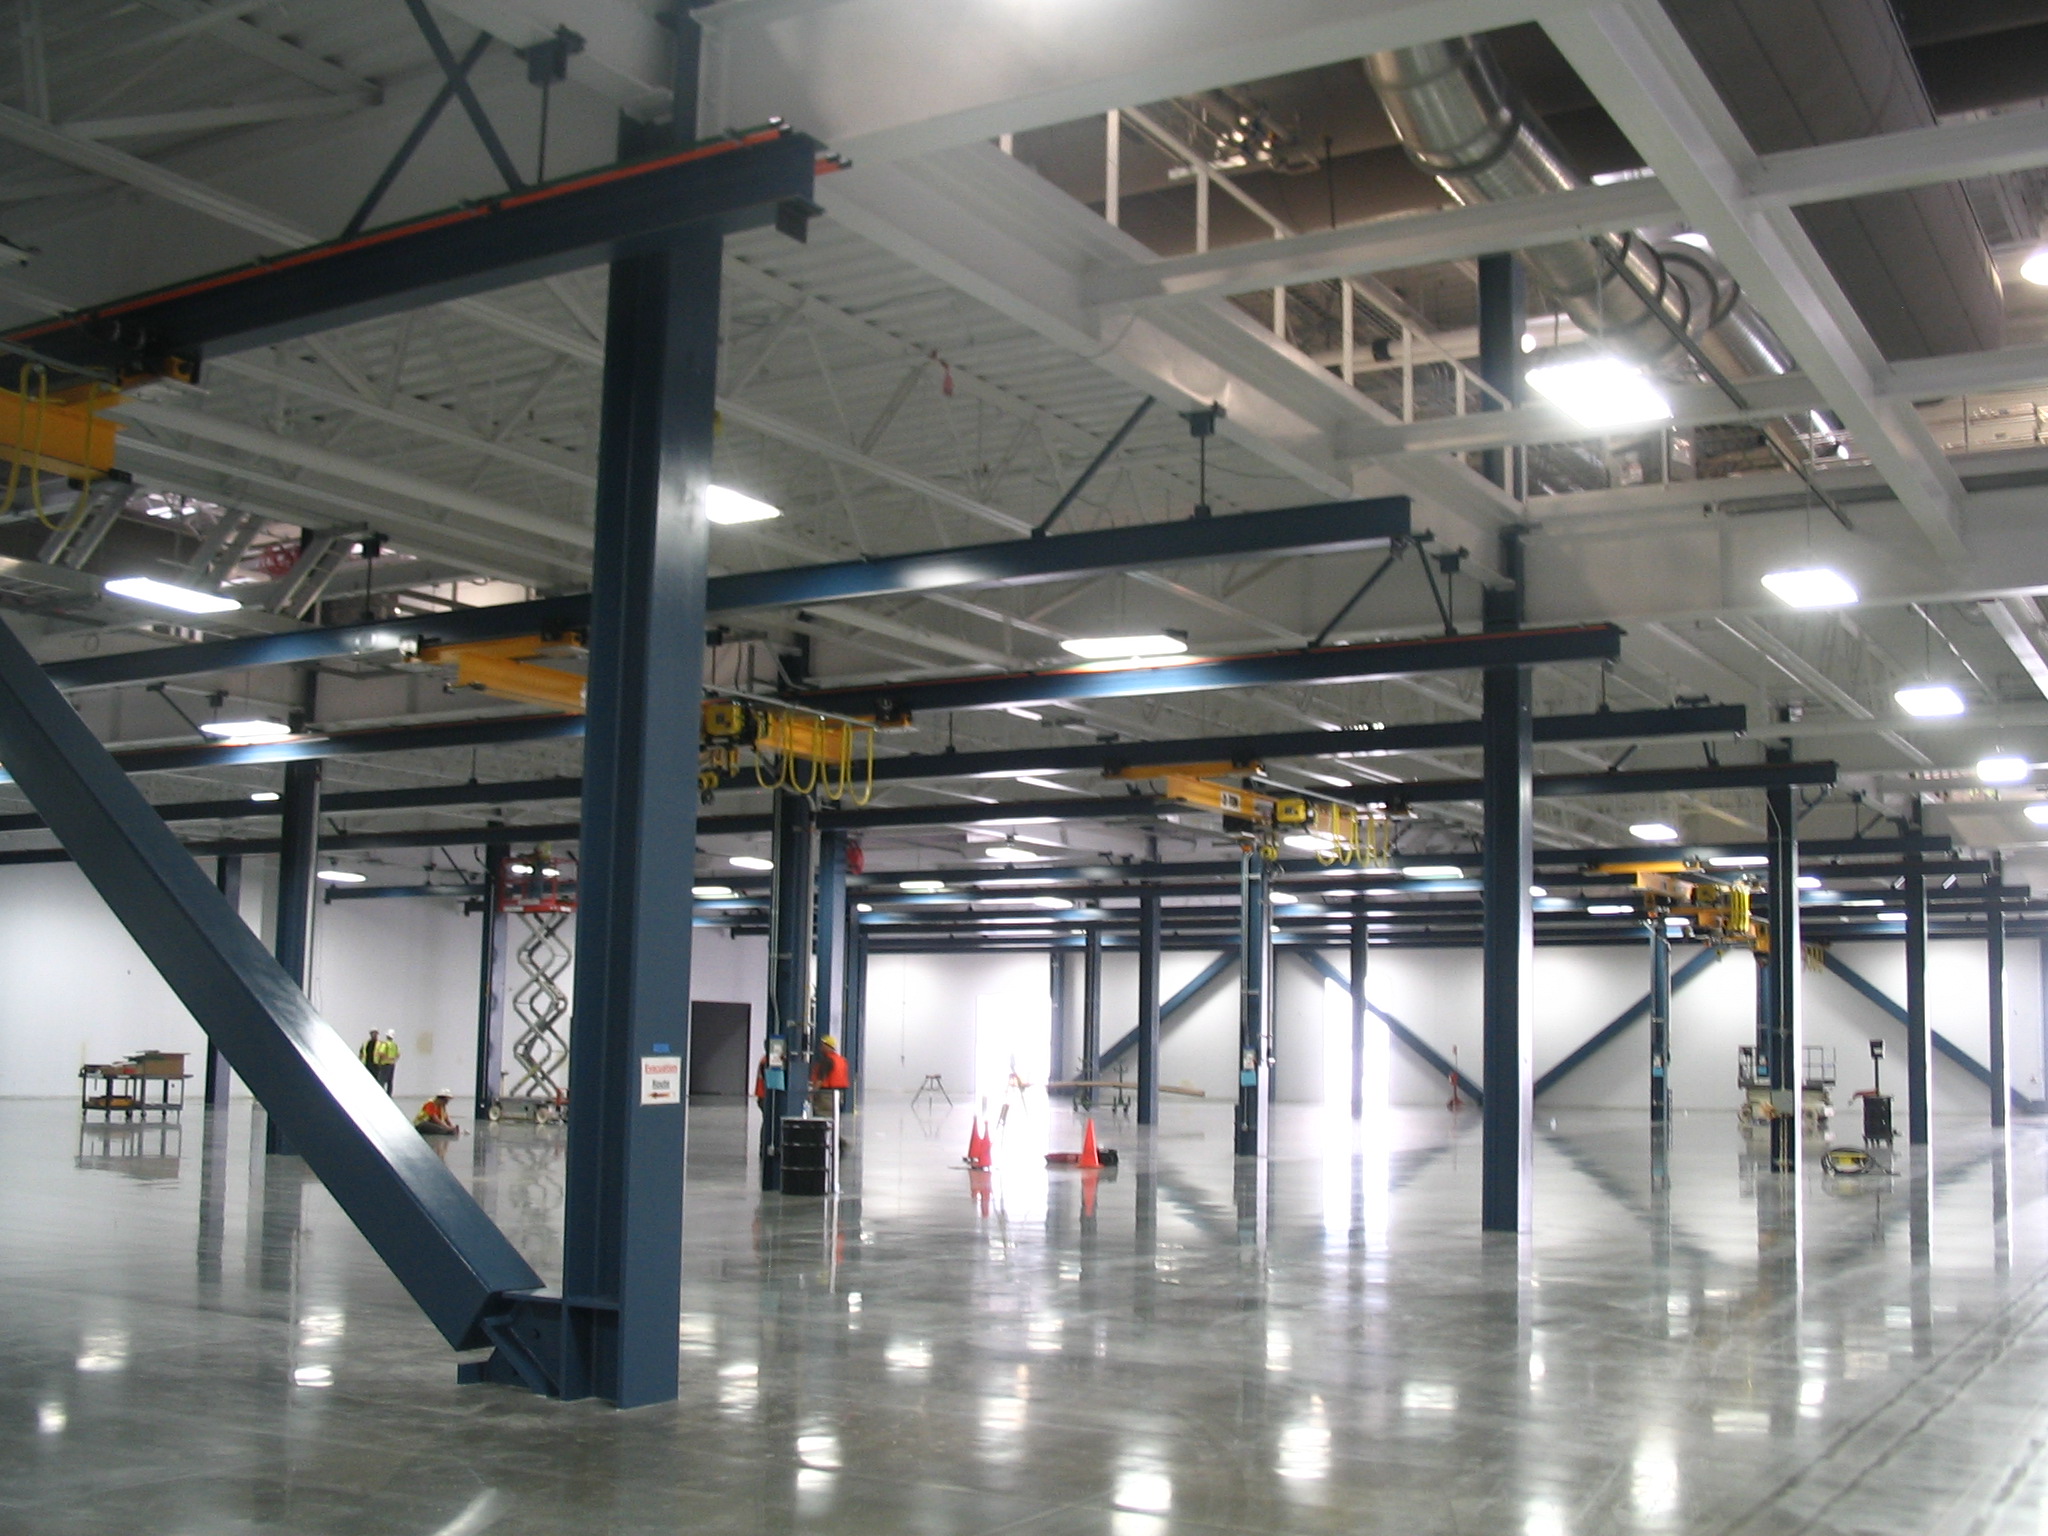 a large warehouse with many racks